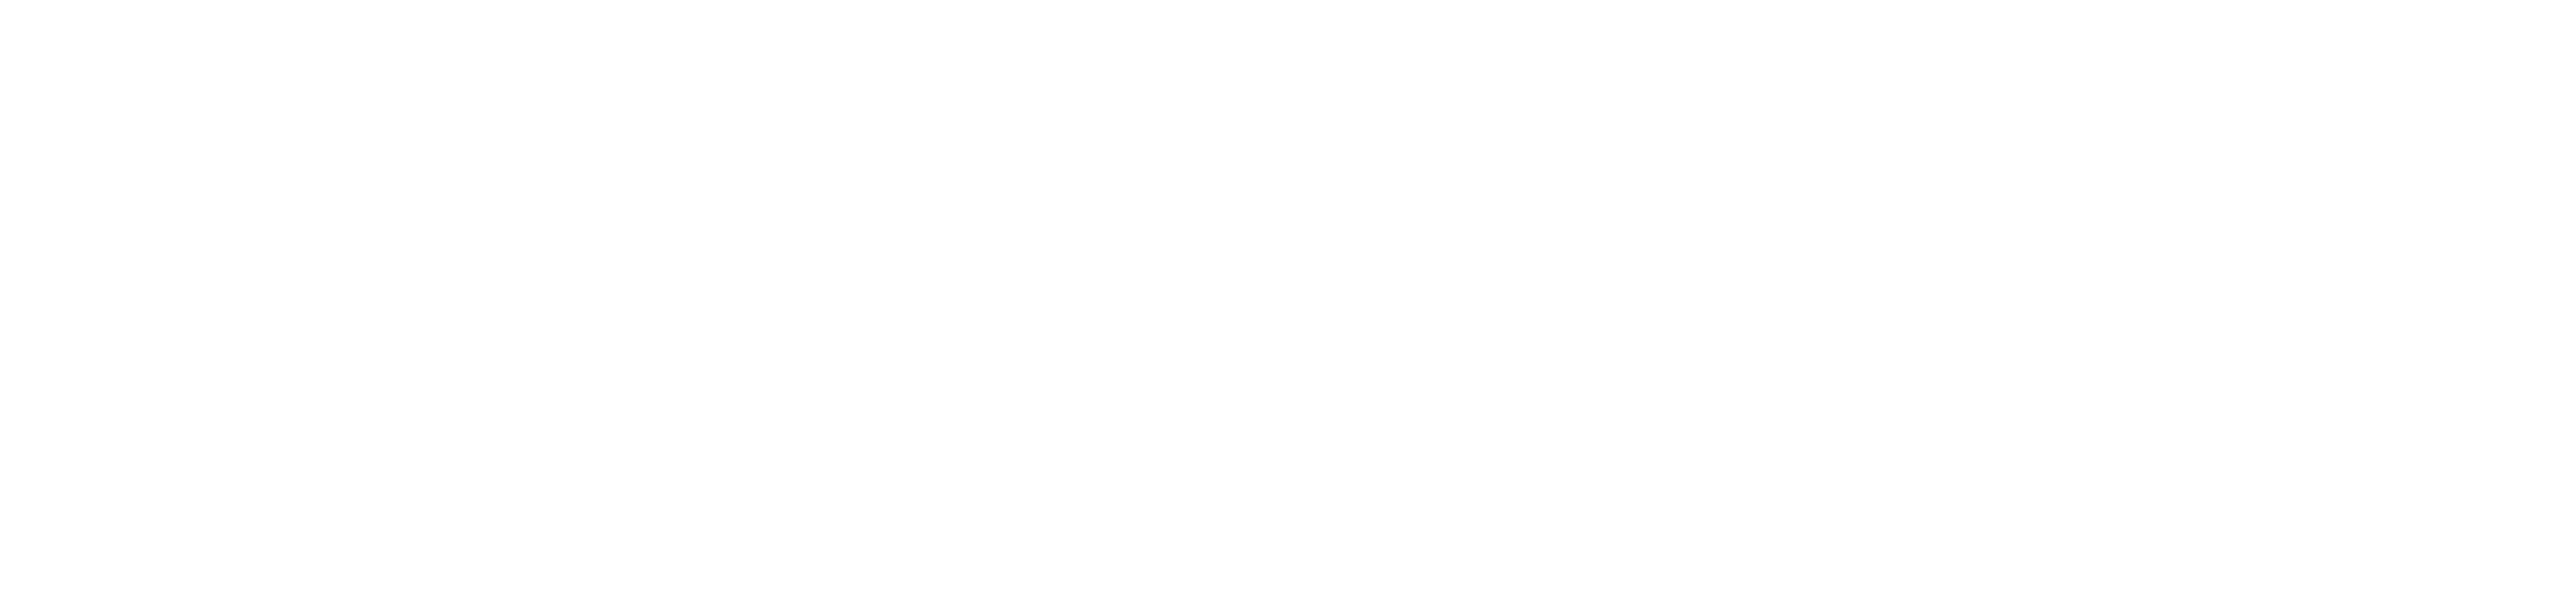 Graphic image of UPI logo in all white for branding purposes